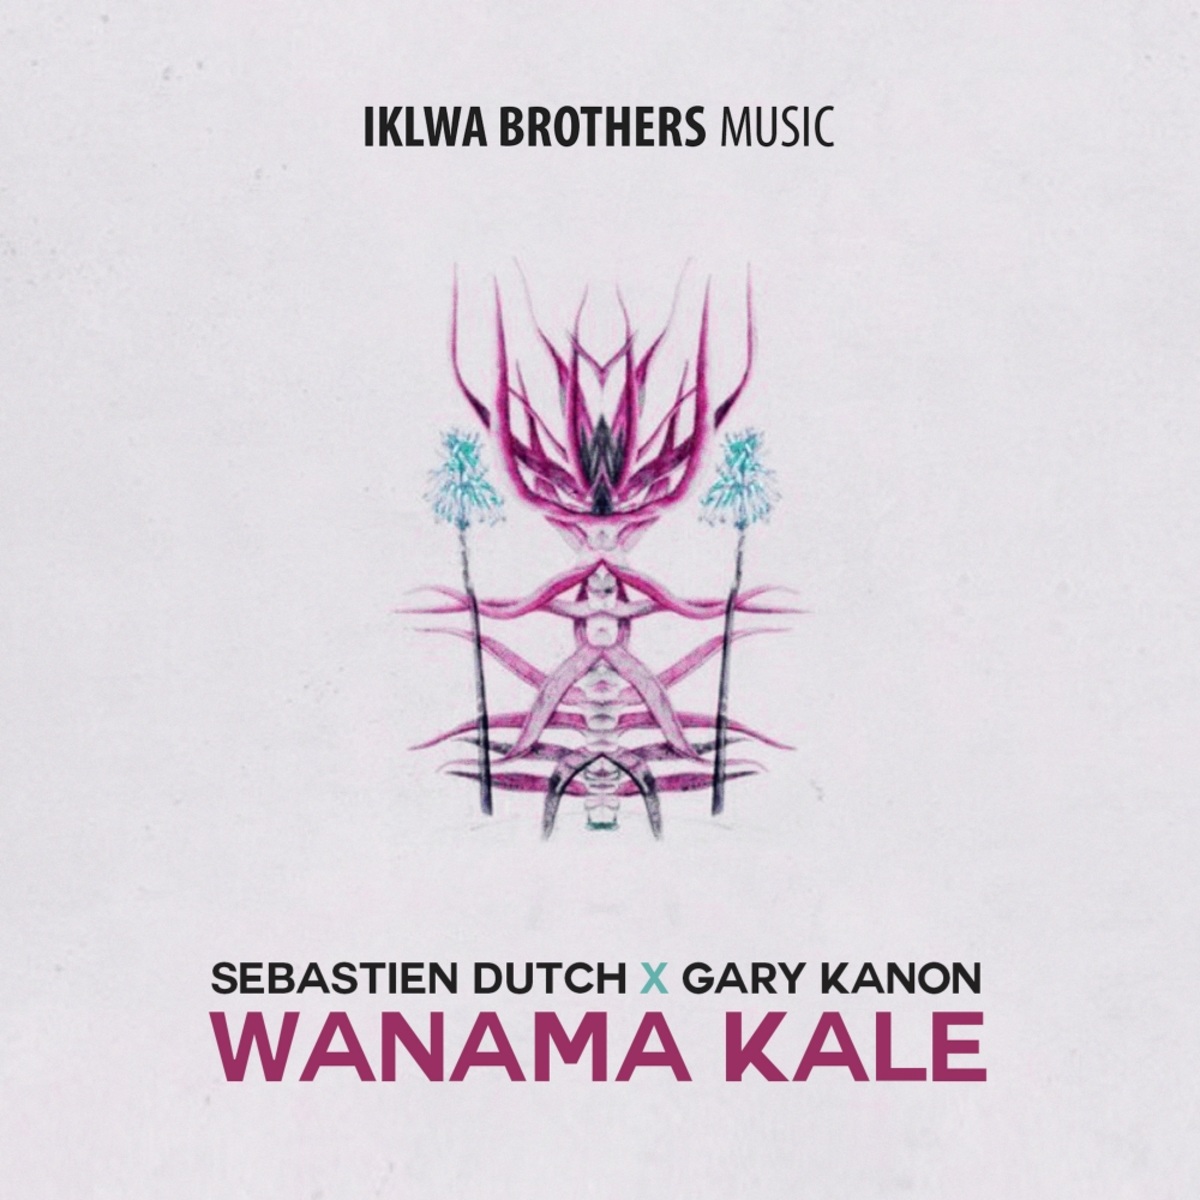 Sebastien Dutch & Gary Kanon - Wanama Kale / Iklwa Brothers Music